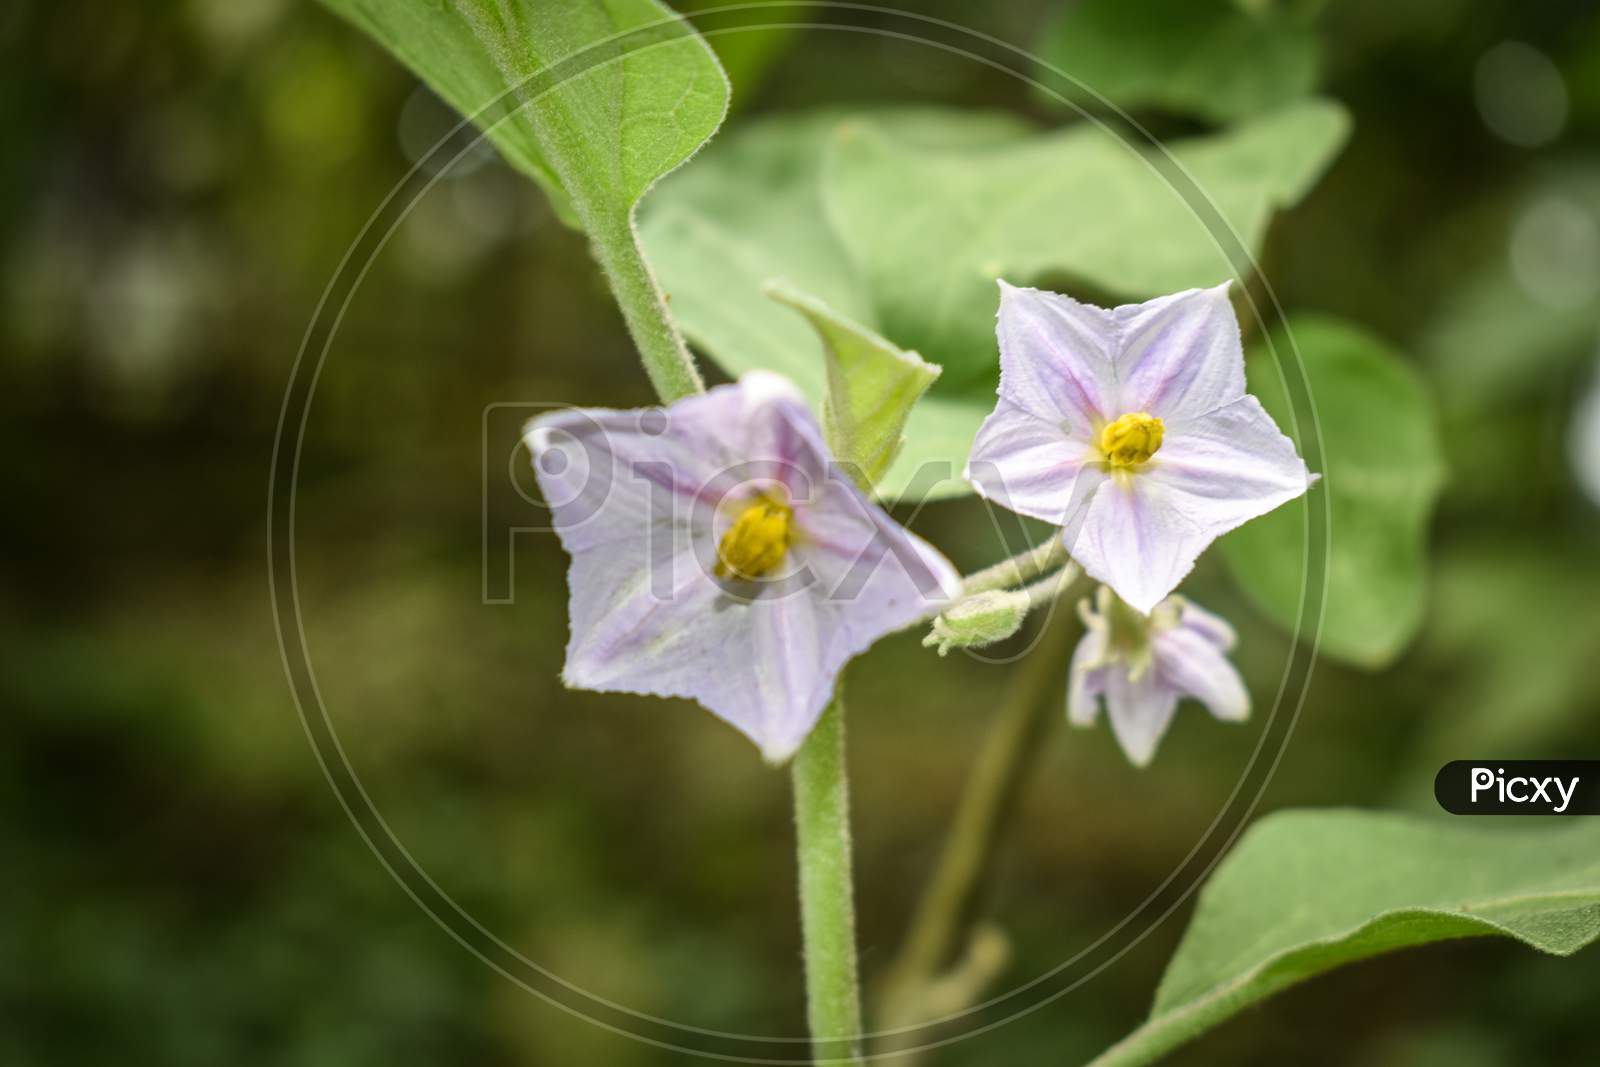 Eggplant flowers